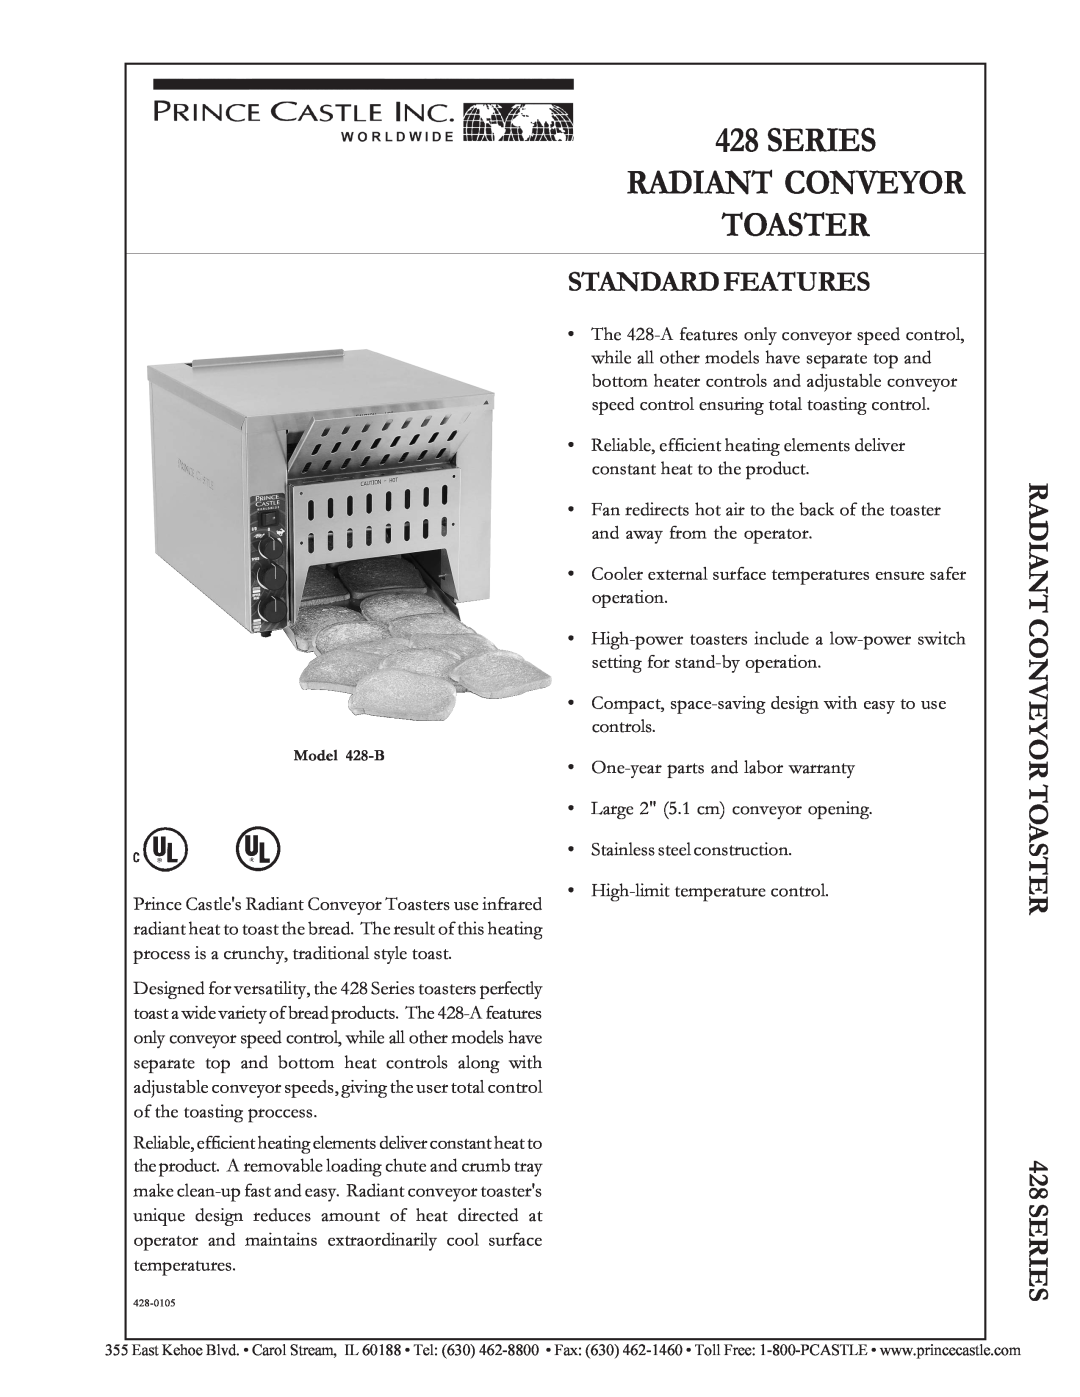 Prince Castle 428 Series warranty Series Radiant Conveyor Toaster, Standardfeatures, RADIANT CONVEYOR TOASTER 428SERIES 